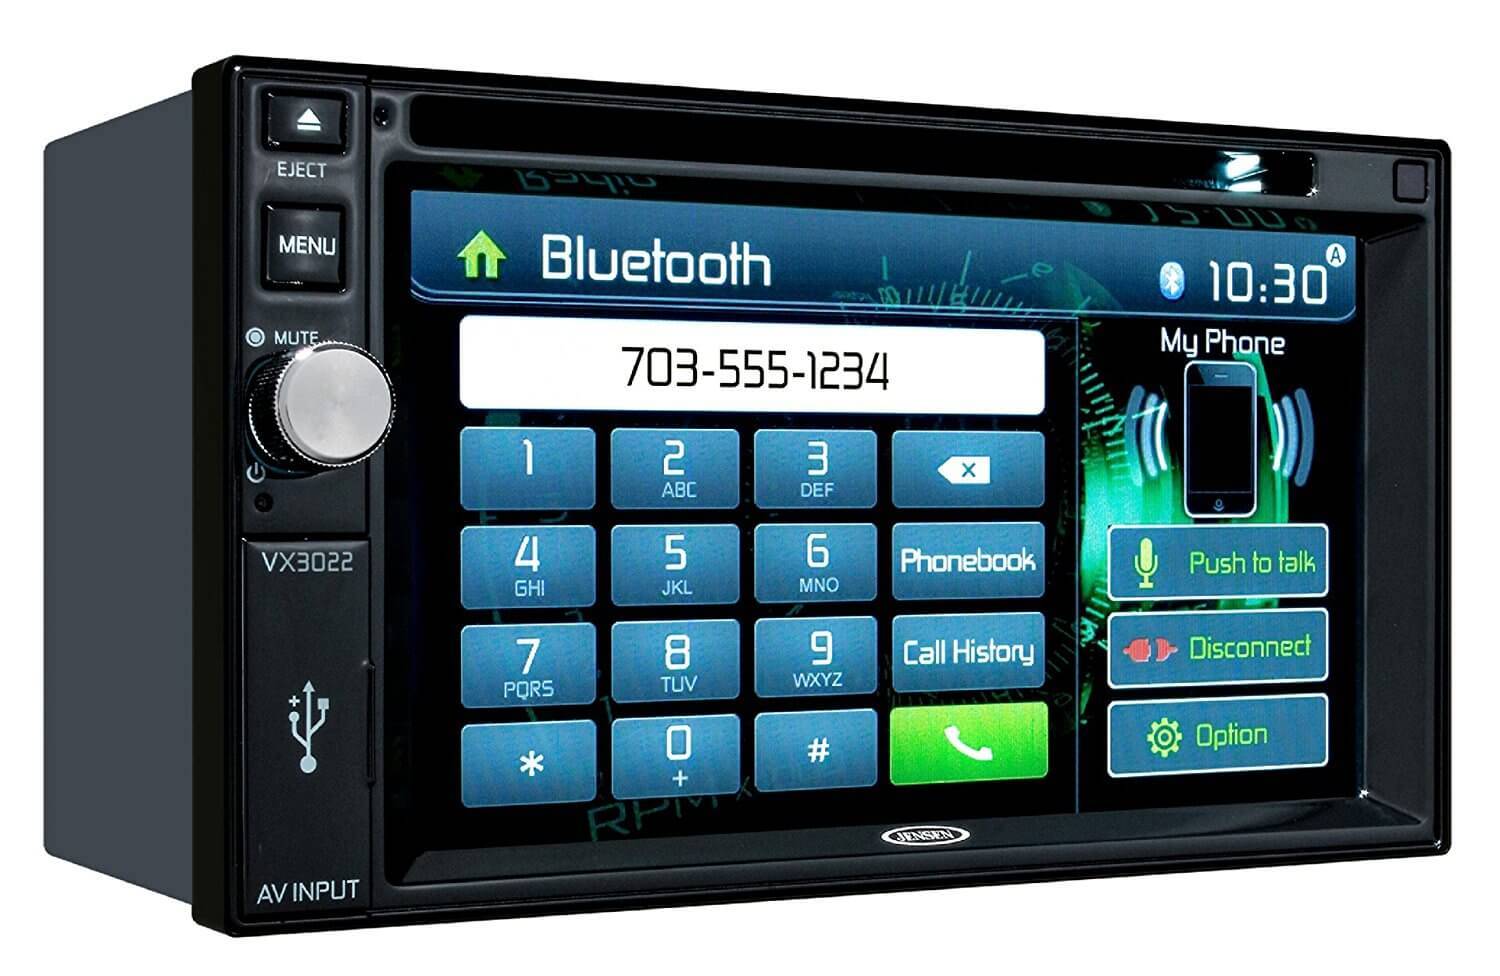 Jensen VX3022 6.2 inch LCD Multimedia Touch Screen Double Din Car Stereo